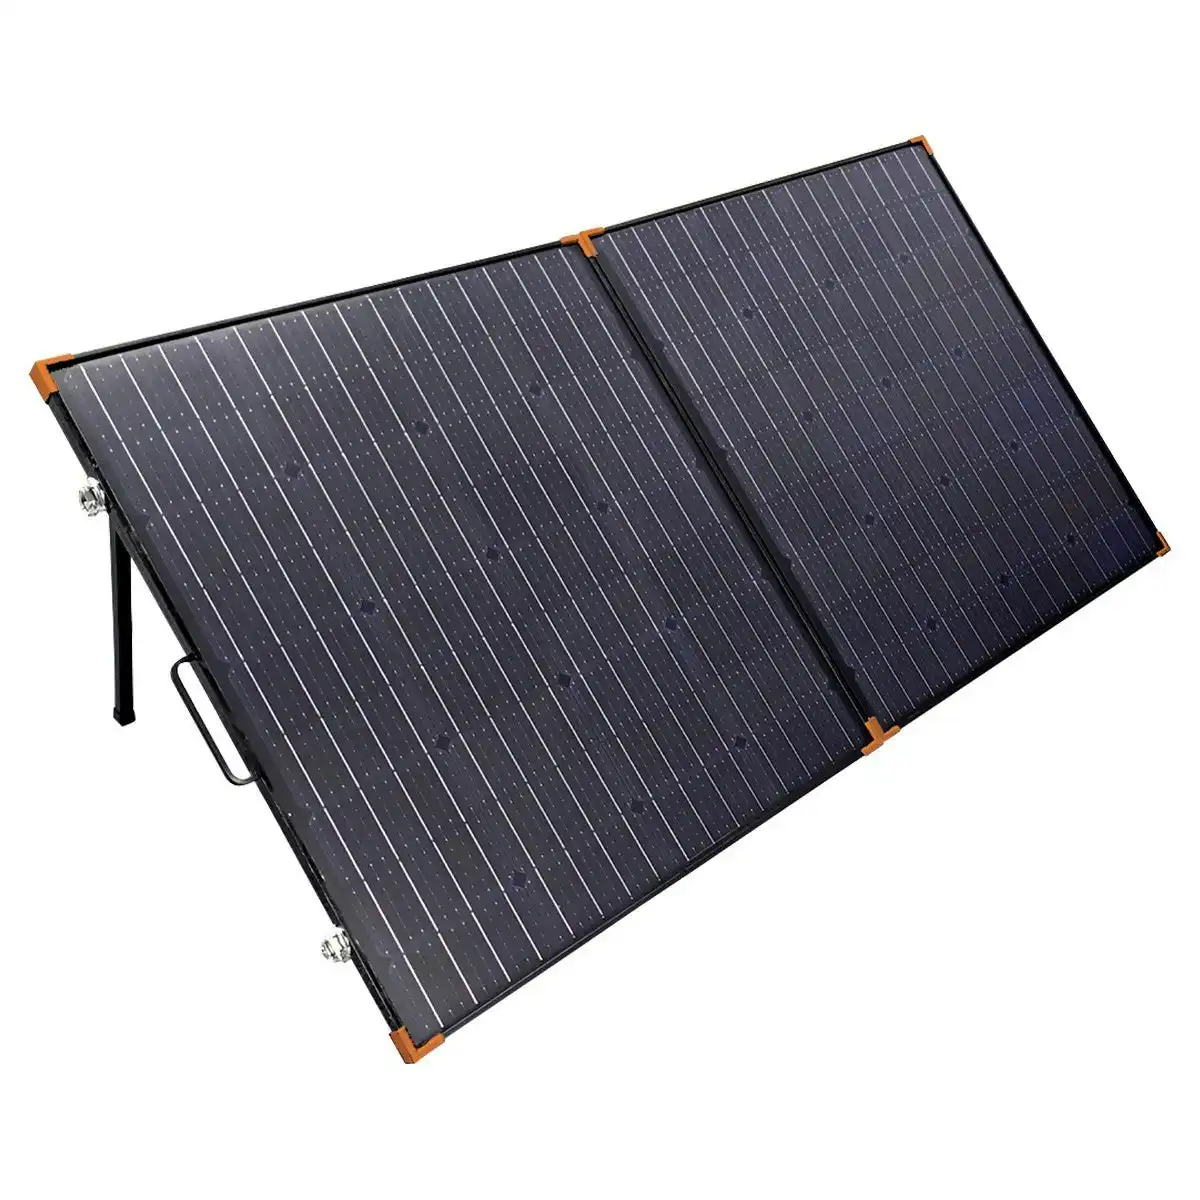 Folding 300W A-Grade Aluminium Solar Panel with Bag for Camping, 4WD & Caravan Adventures